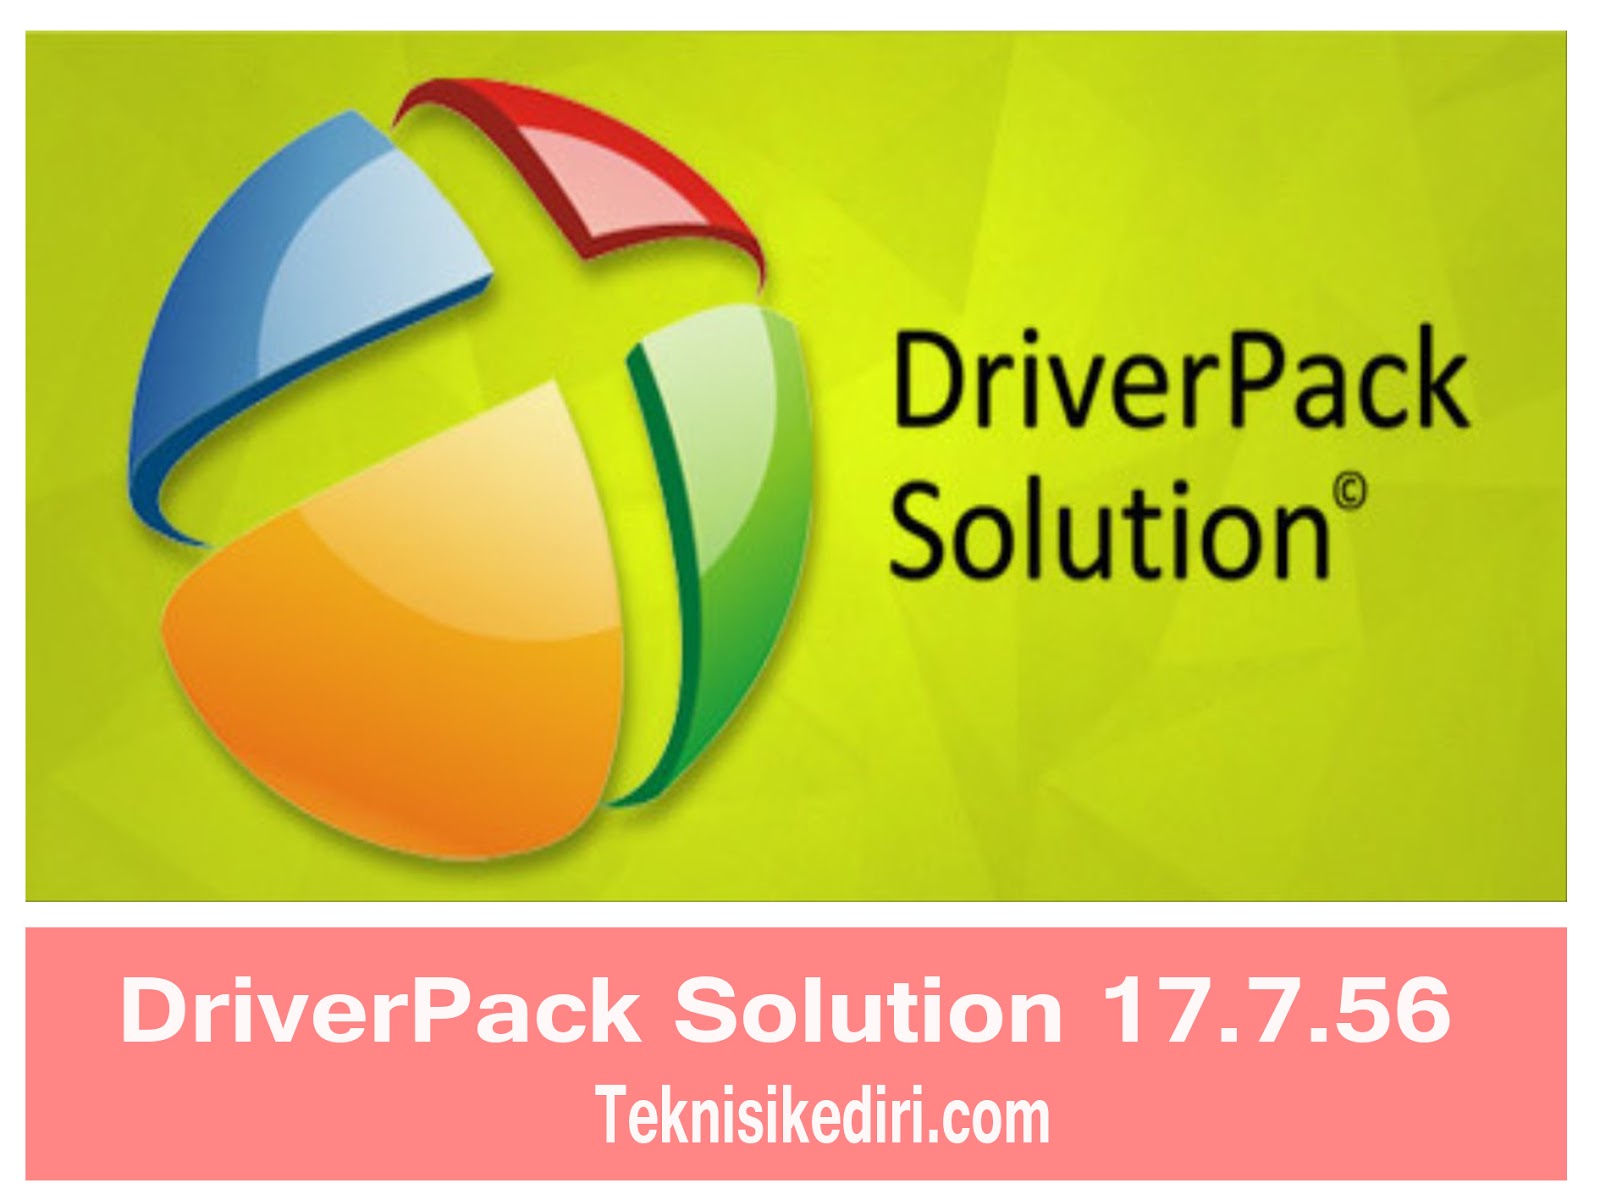 Драйвер пак солюшион. DRIVERPACK solution. DRIVERPACK solution логотип. DRIVERPACK solution 2017. DRIVERPACK картинки.